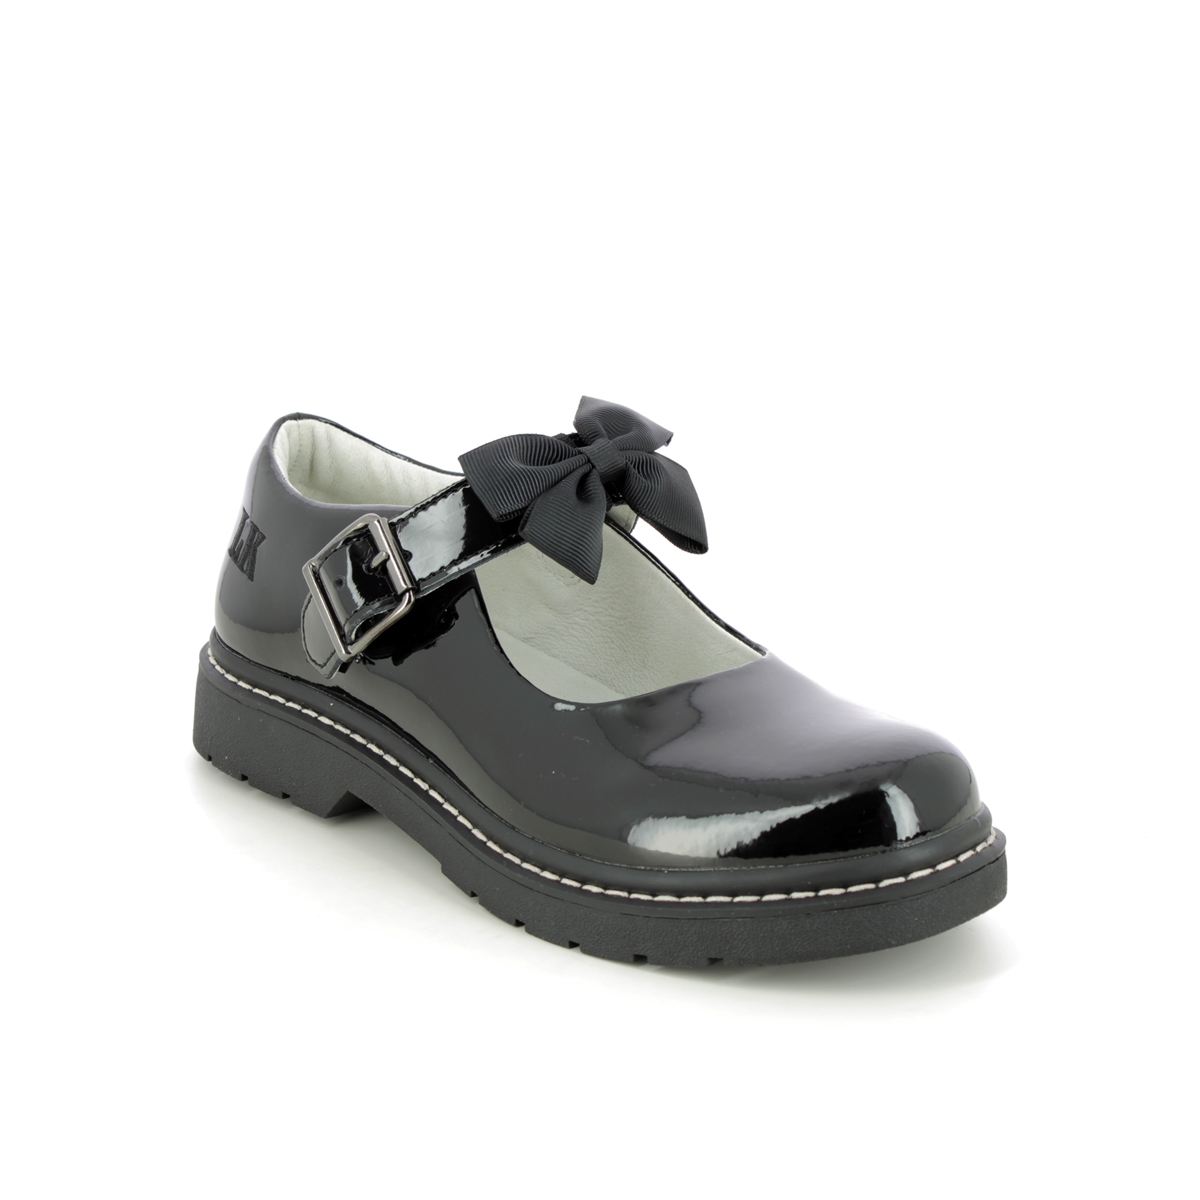 Lelli Kelly Audrey Miss Lk Black patent Kids Girls shoes LK8360-DB01 in a Plain Leather in Size 35